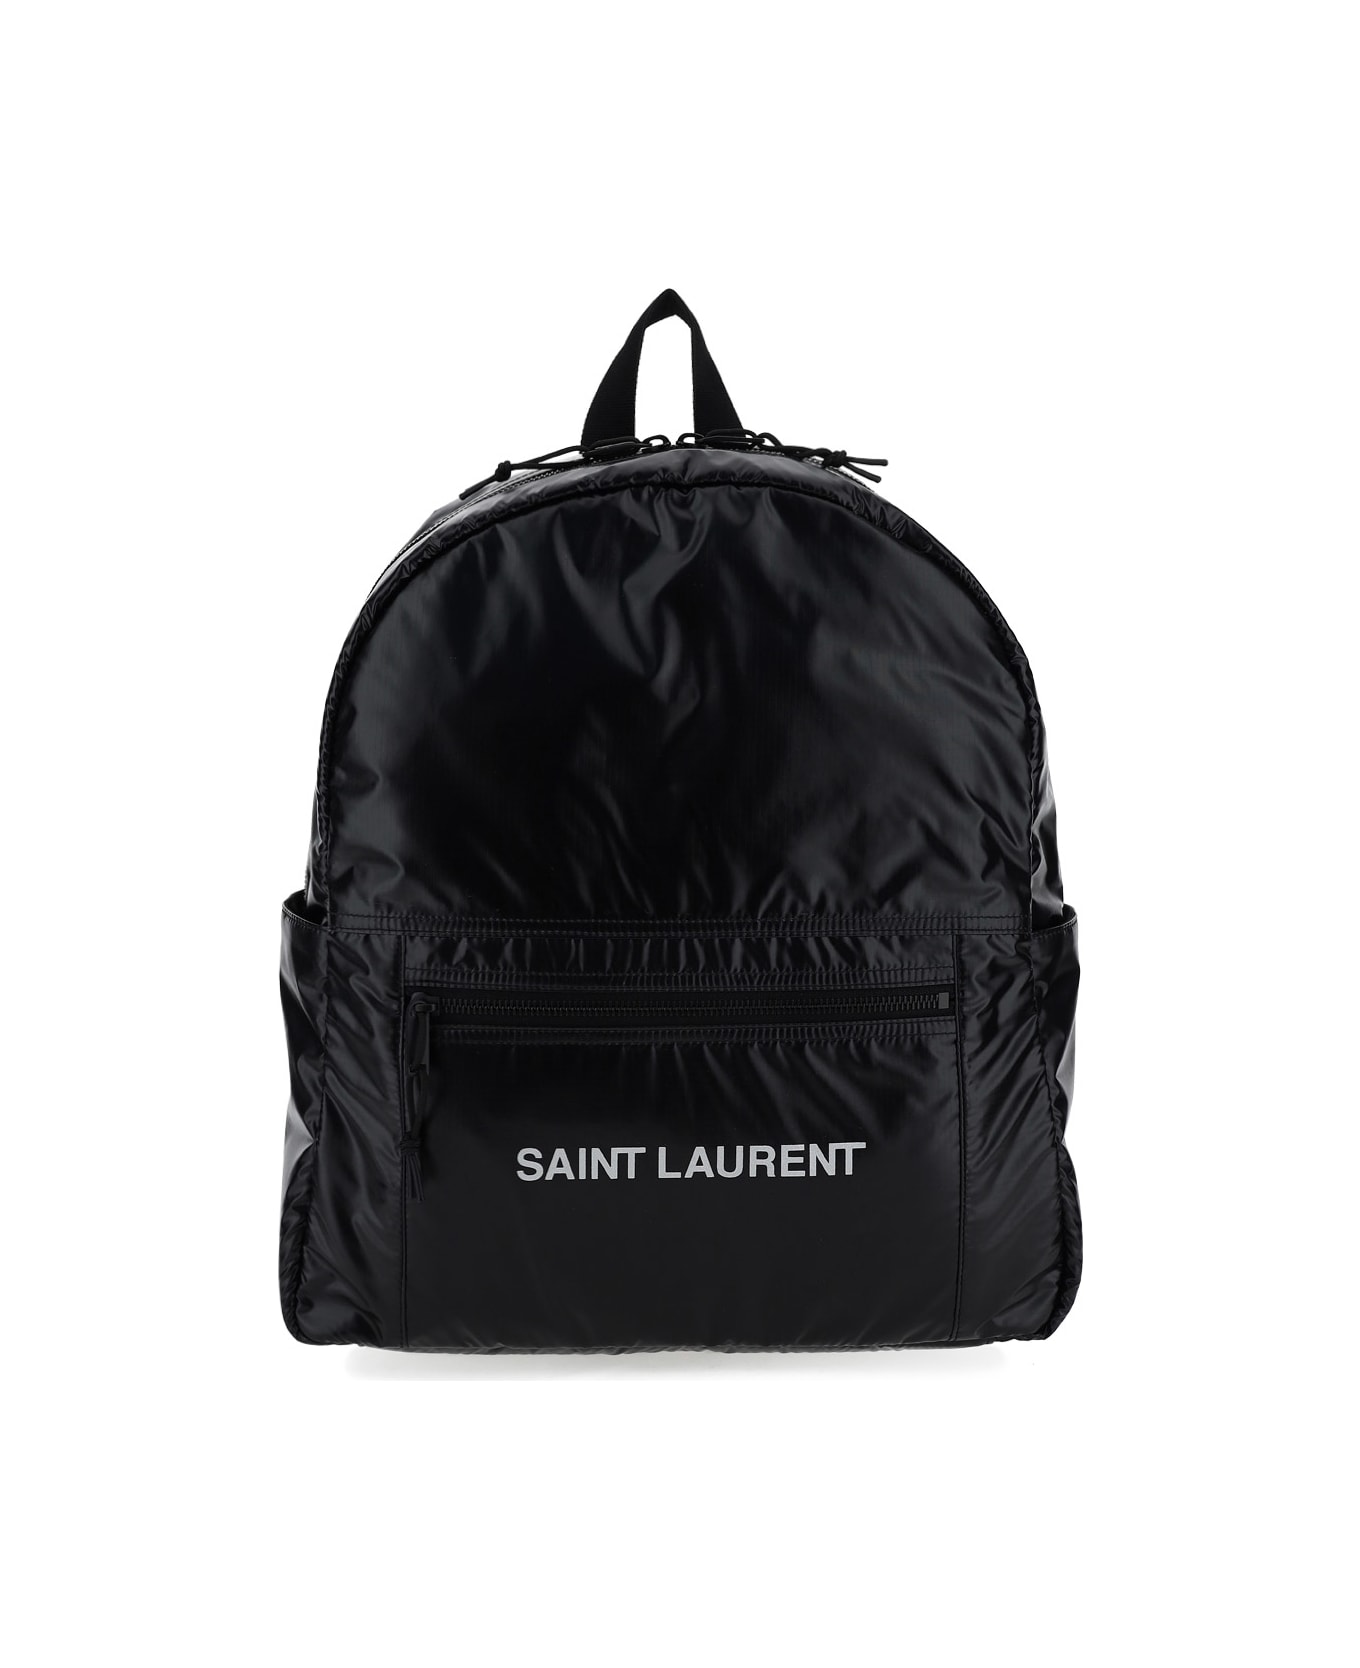 Saint Laurent Backpack - Black